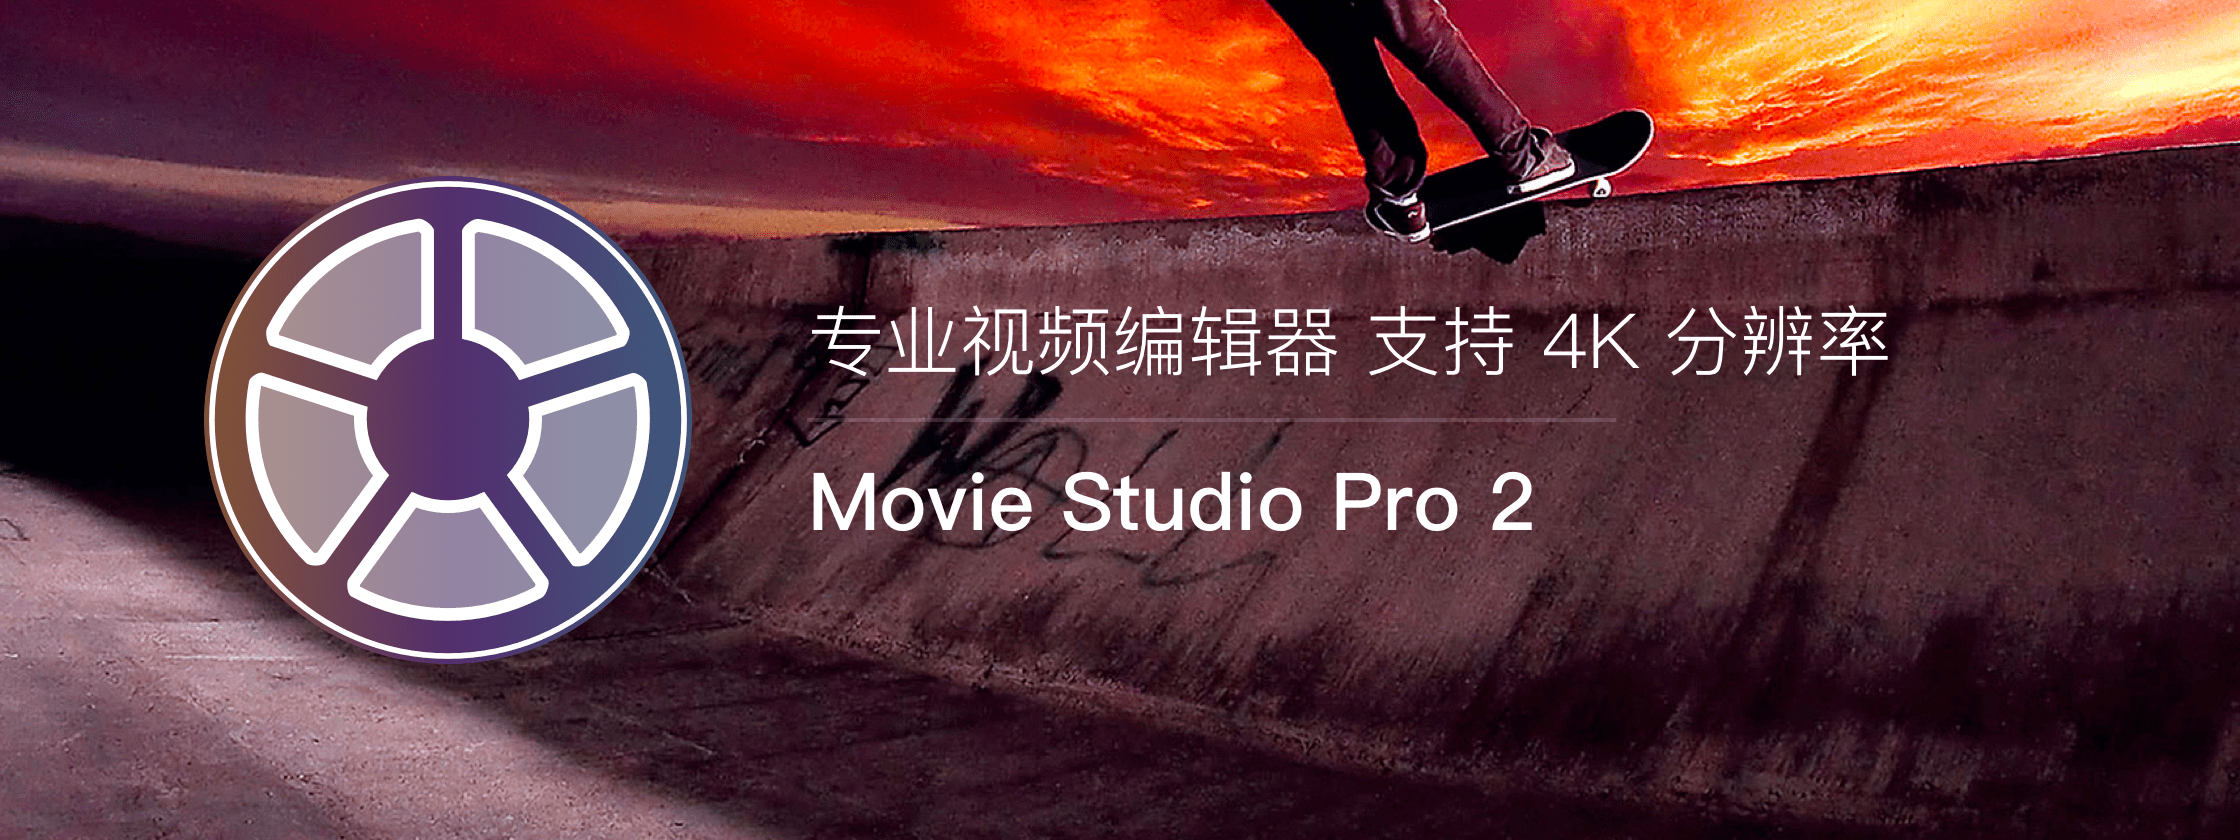 Movie Studio Pro 2: 专业视频编辑器